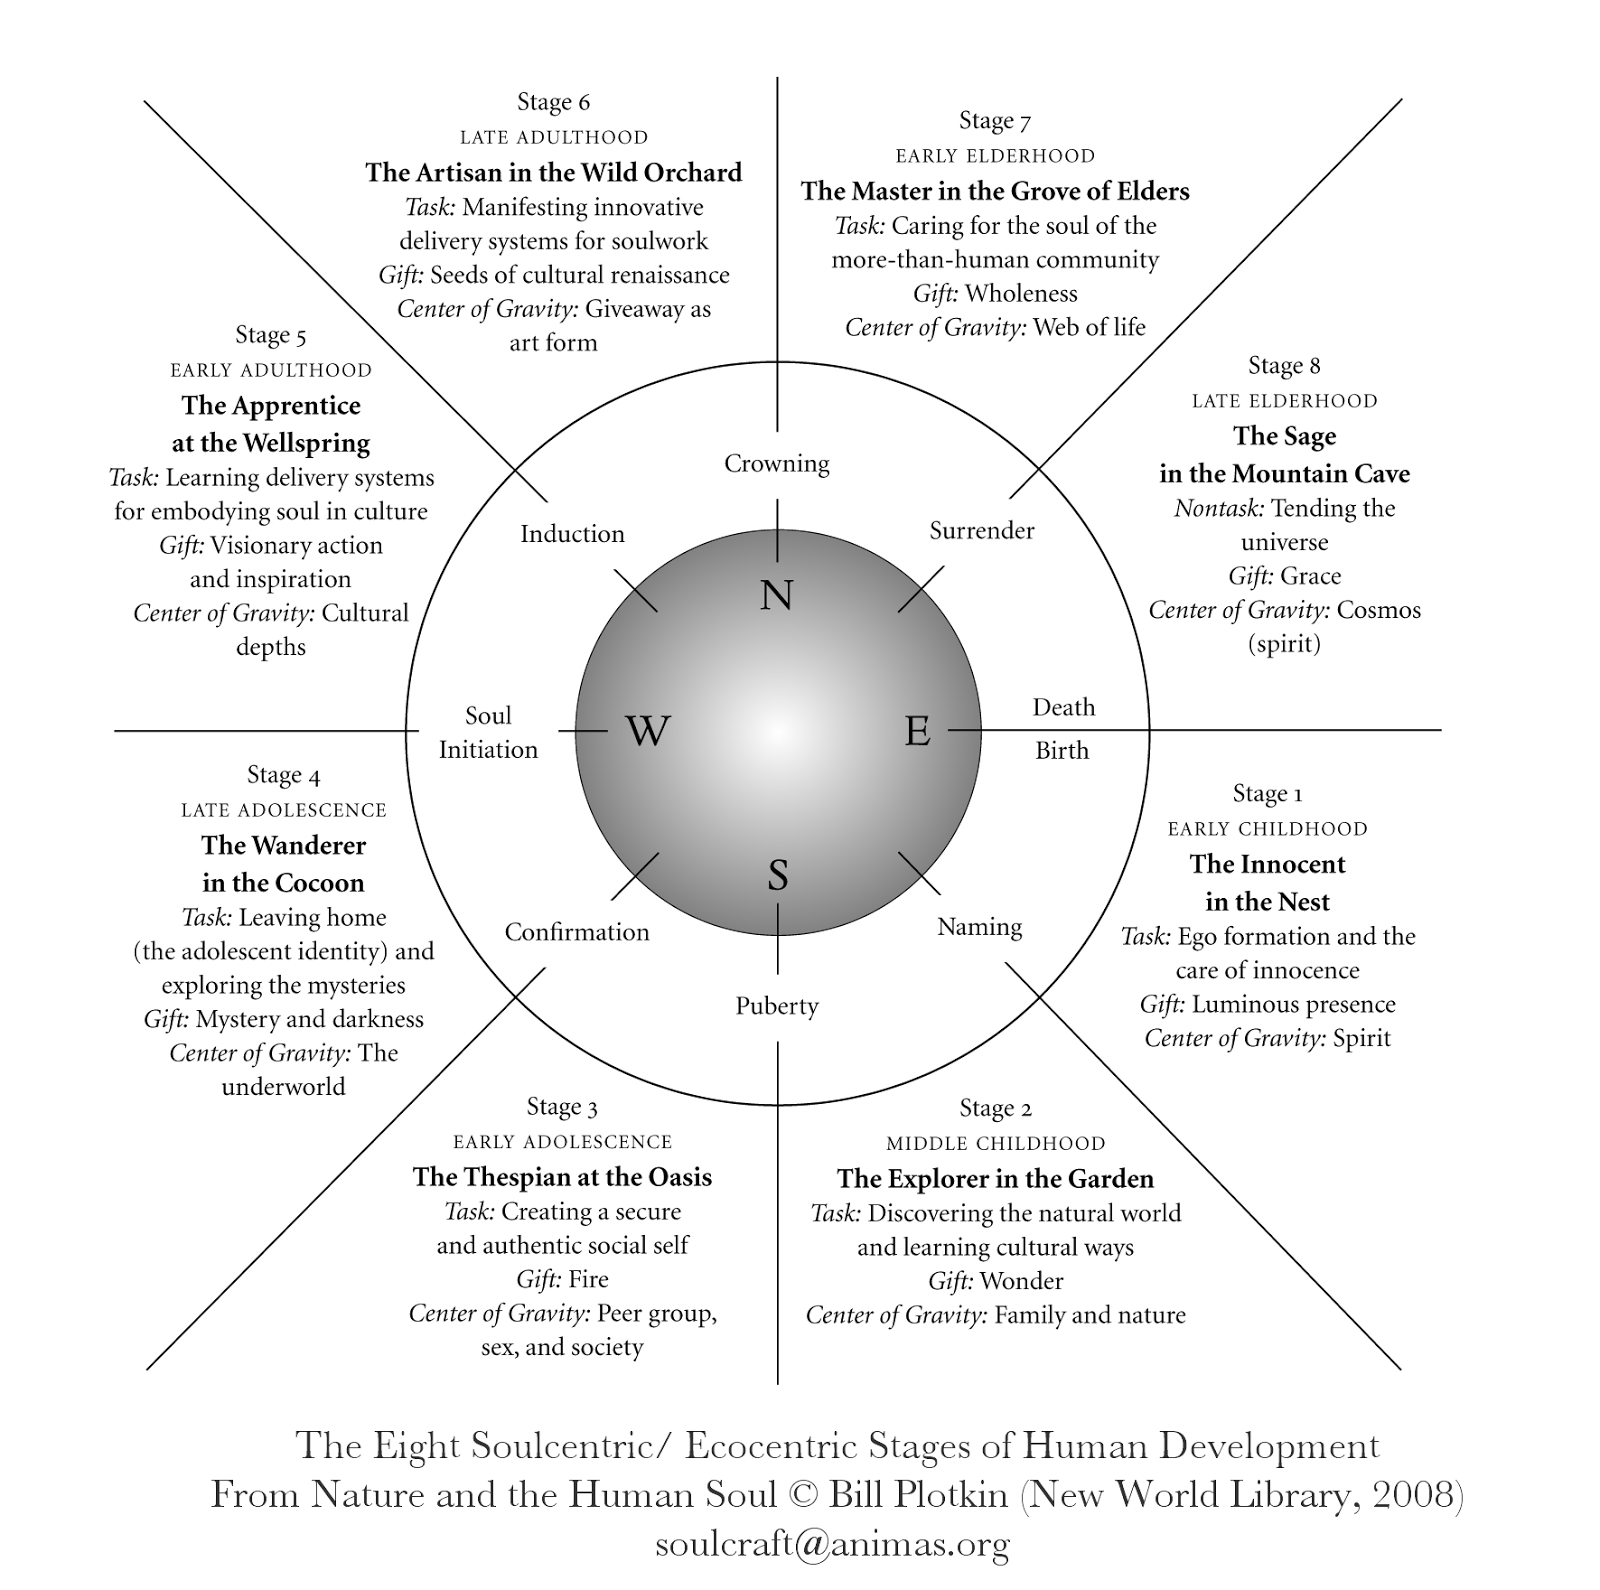 A soul-centric model of human development